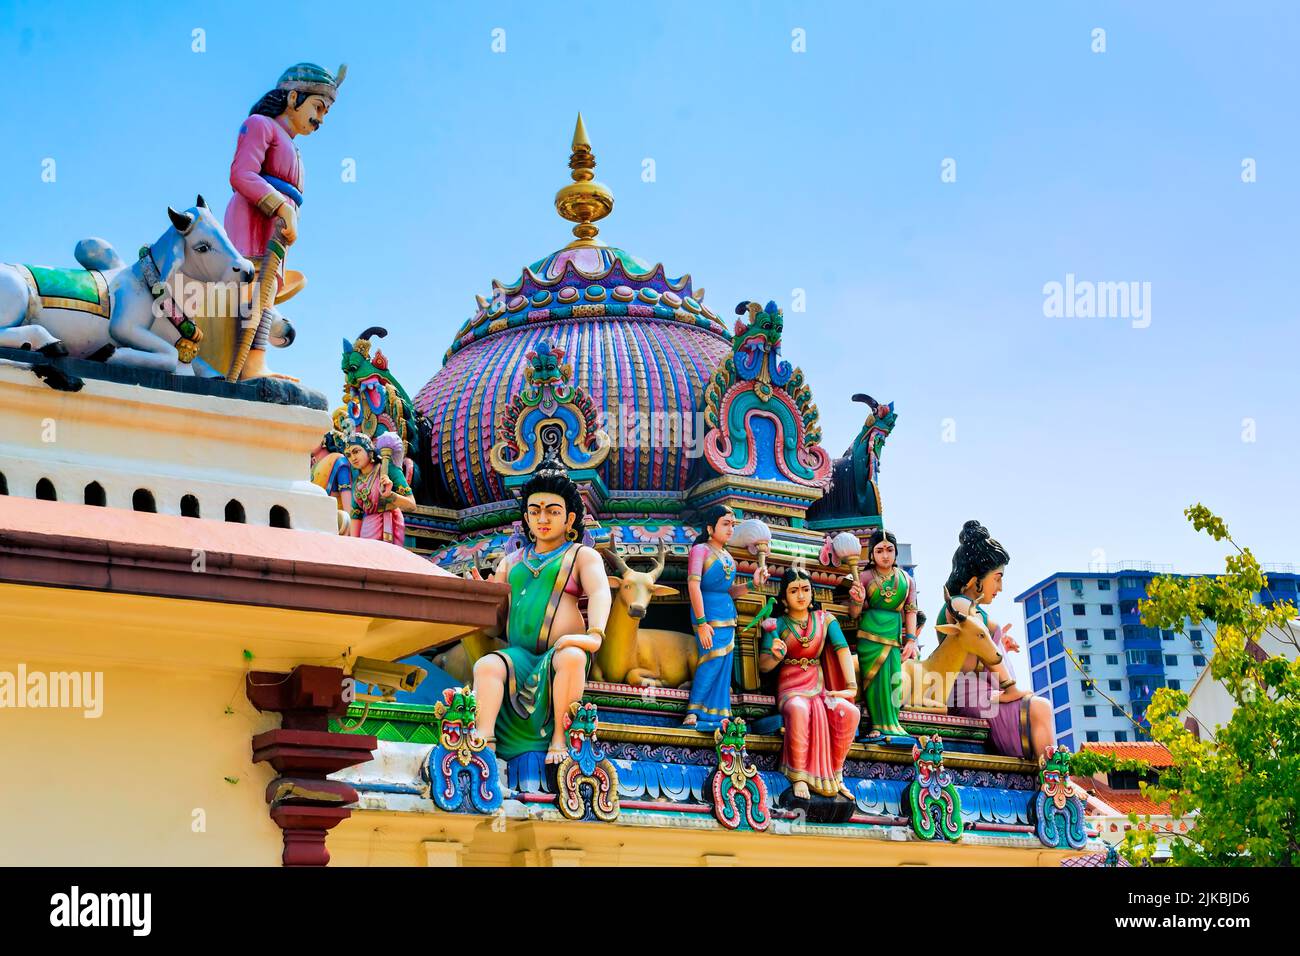 Colorful ornaments at Singapore's Sri Mariamman Hindu temple Stock Photo